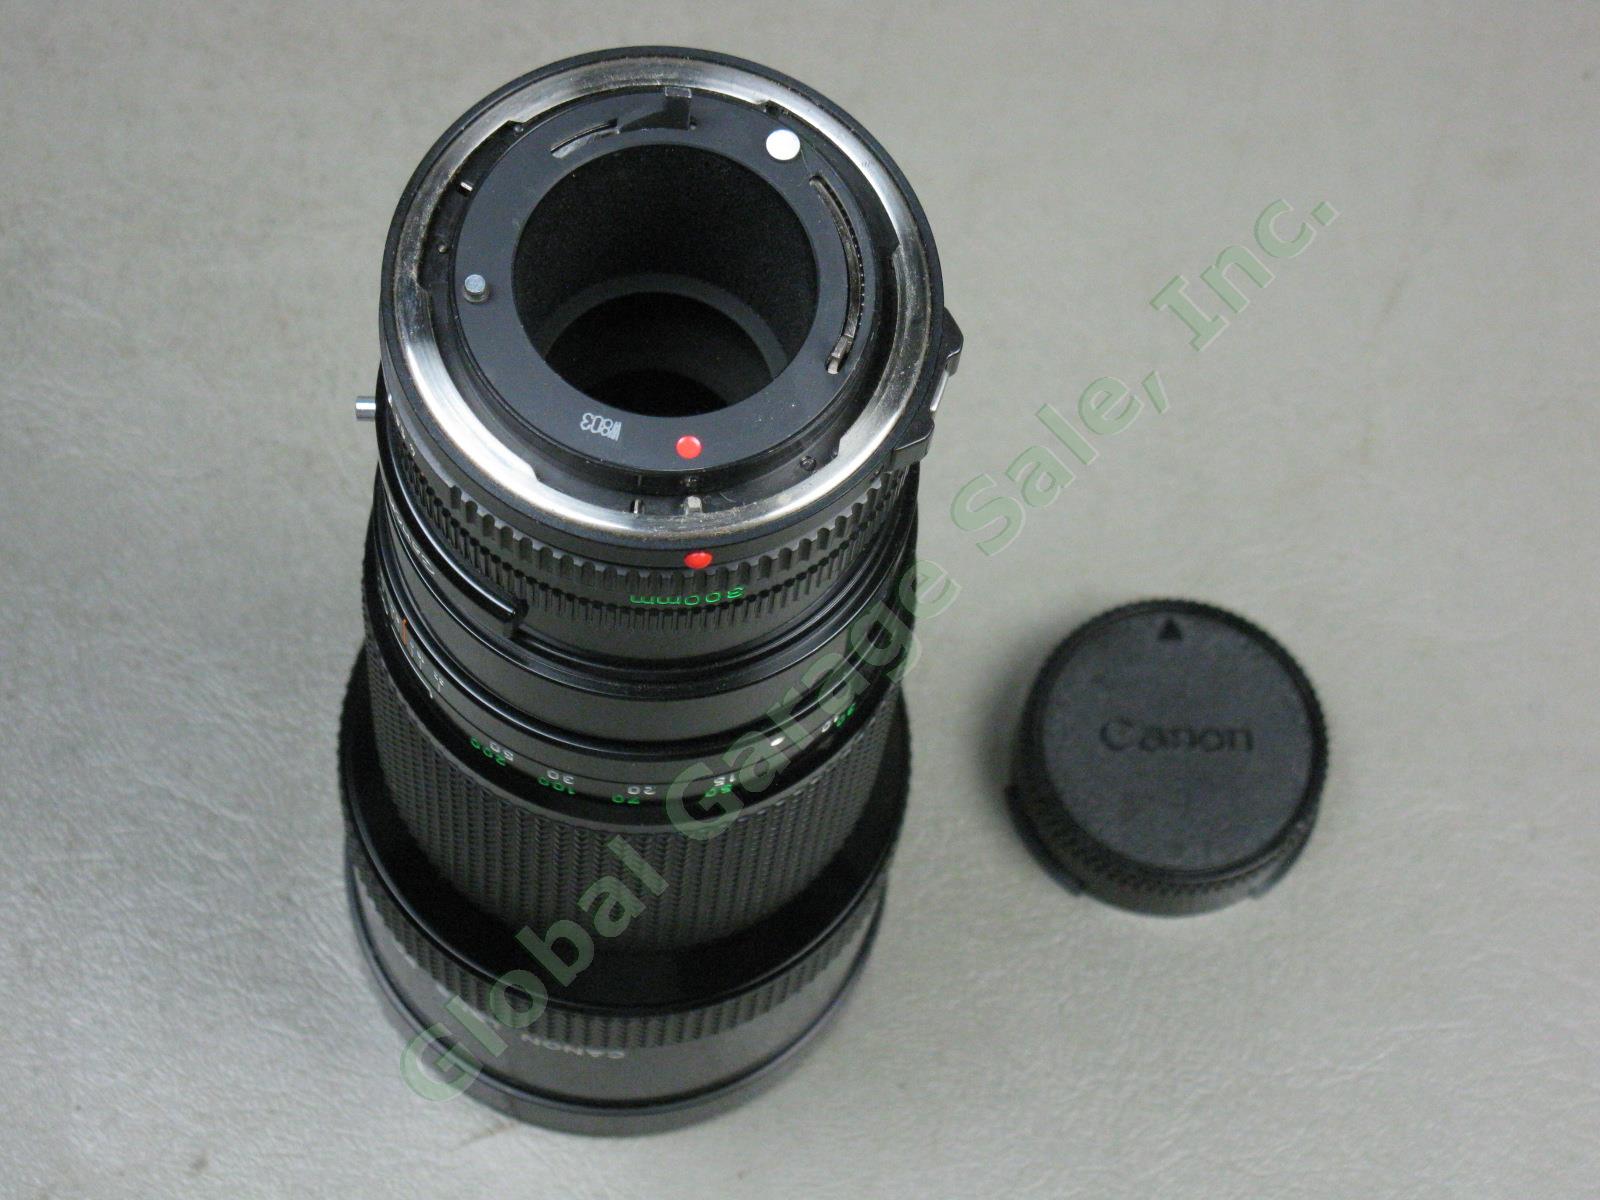 Canon FD 300mm 1:4 f/4 Telephoto Camera Lens 21907 Exc Condition No Reserve! 4